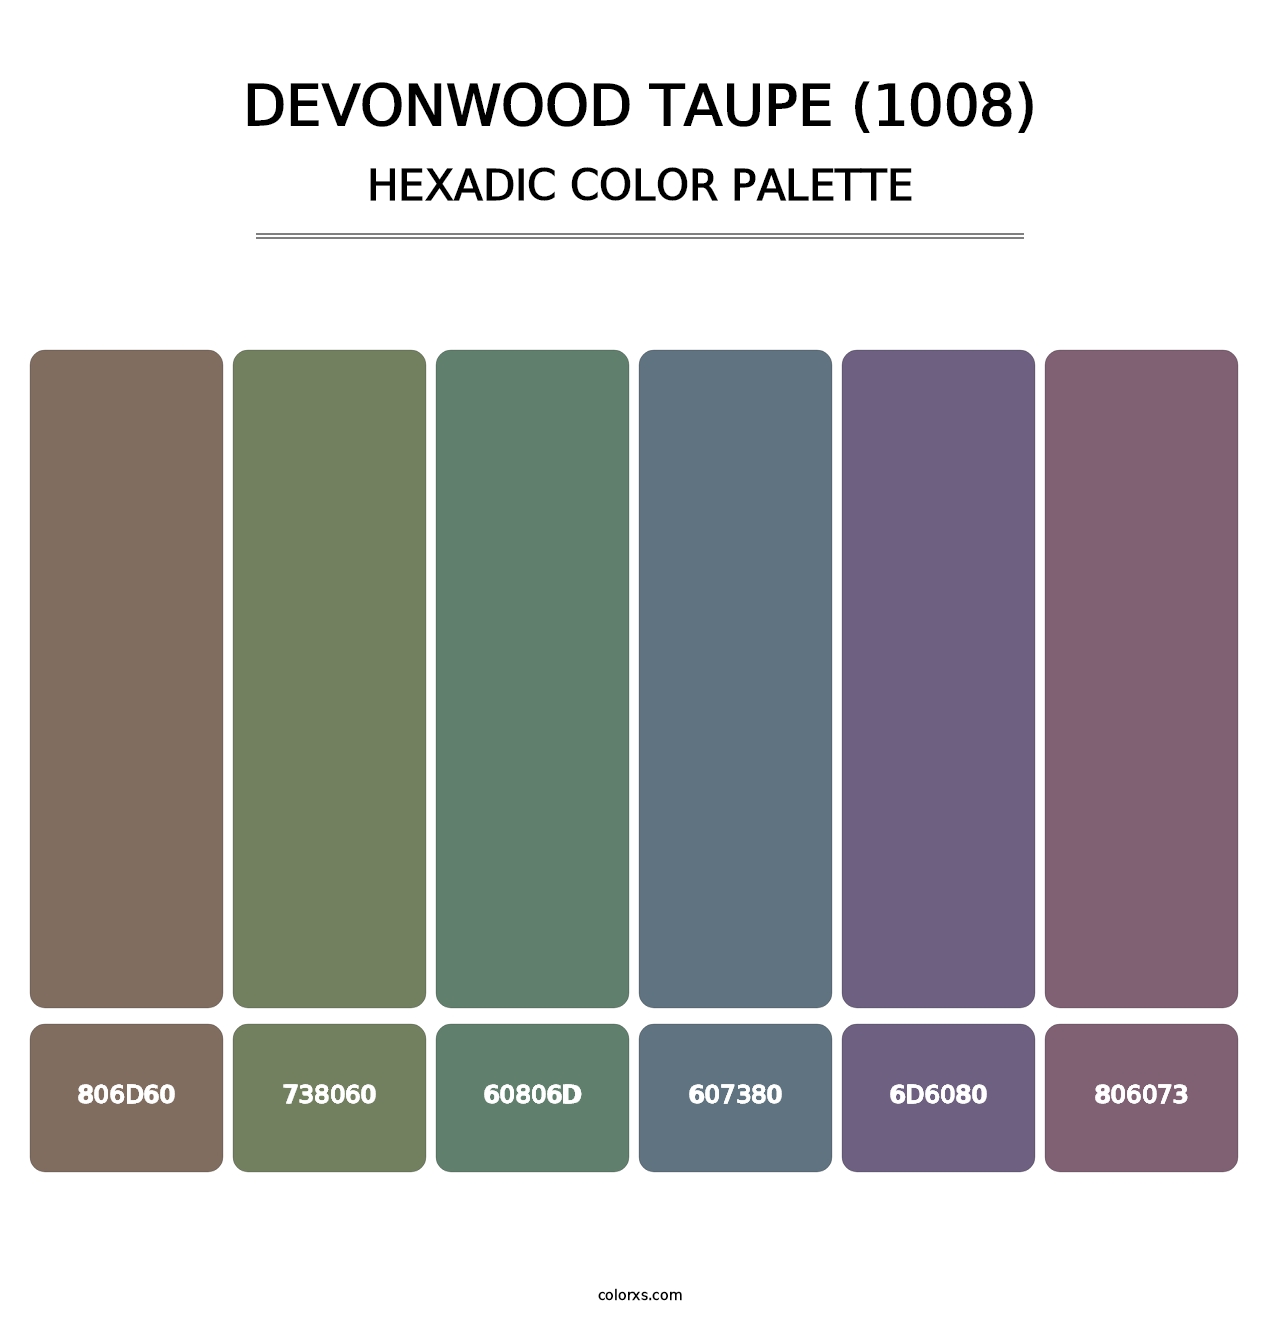 Devonwood Taupe (1008) - Hexadic Color Palette